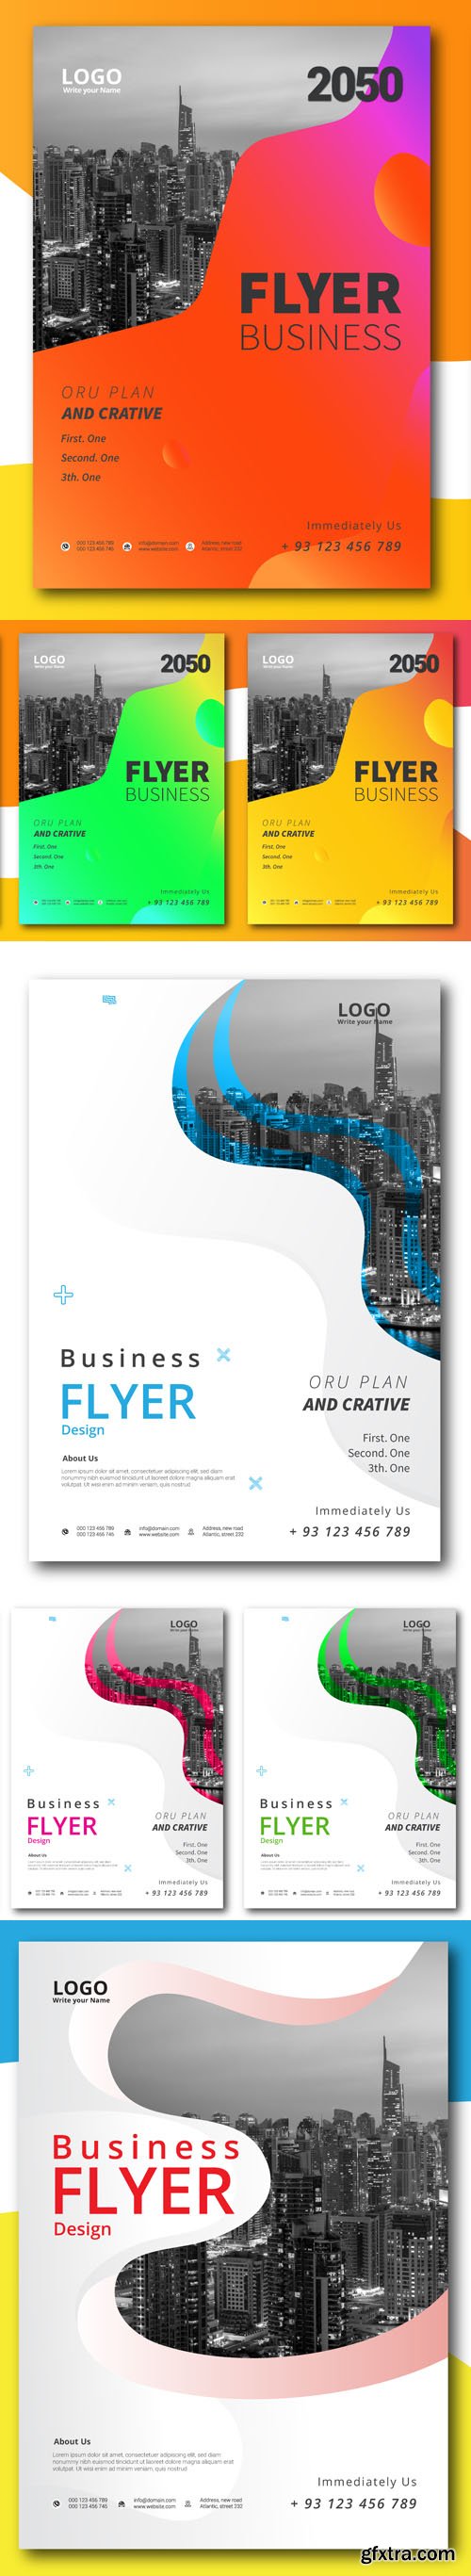 5 Creative Corporate Business Flyers Vector Templates